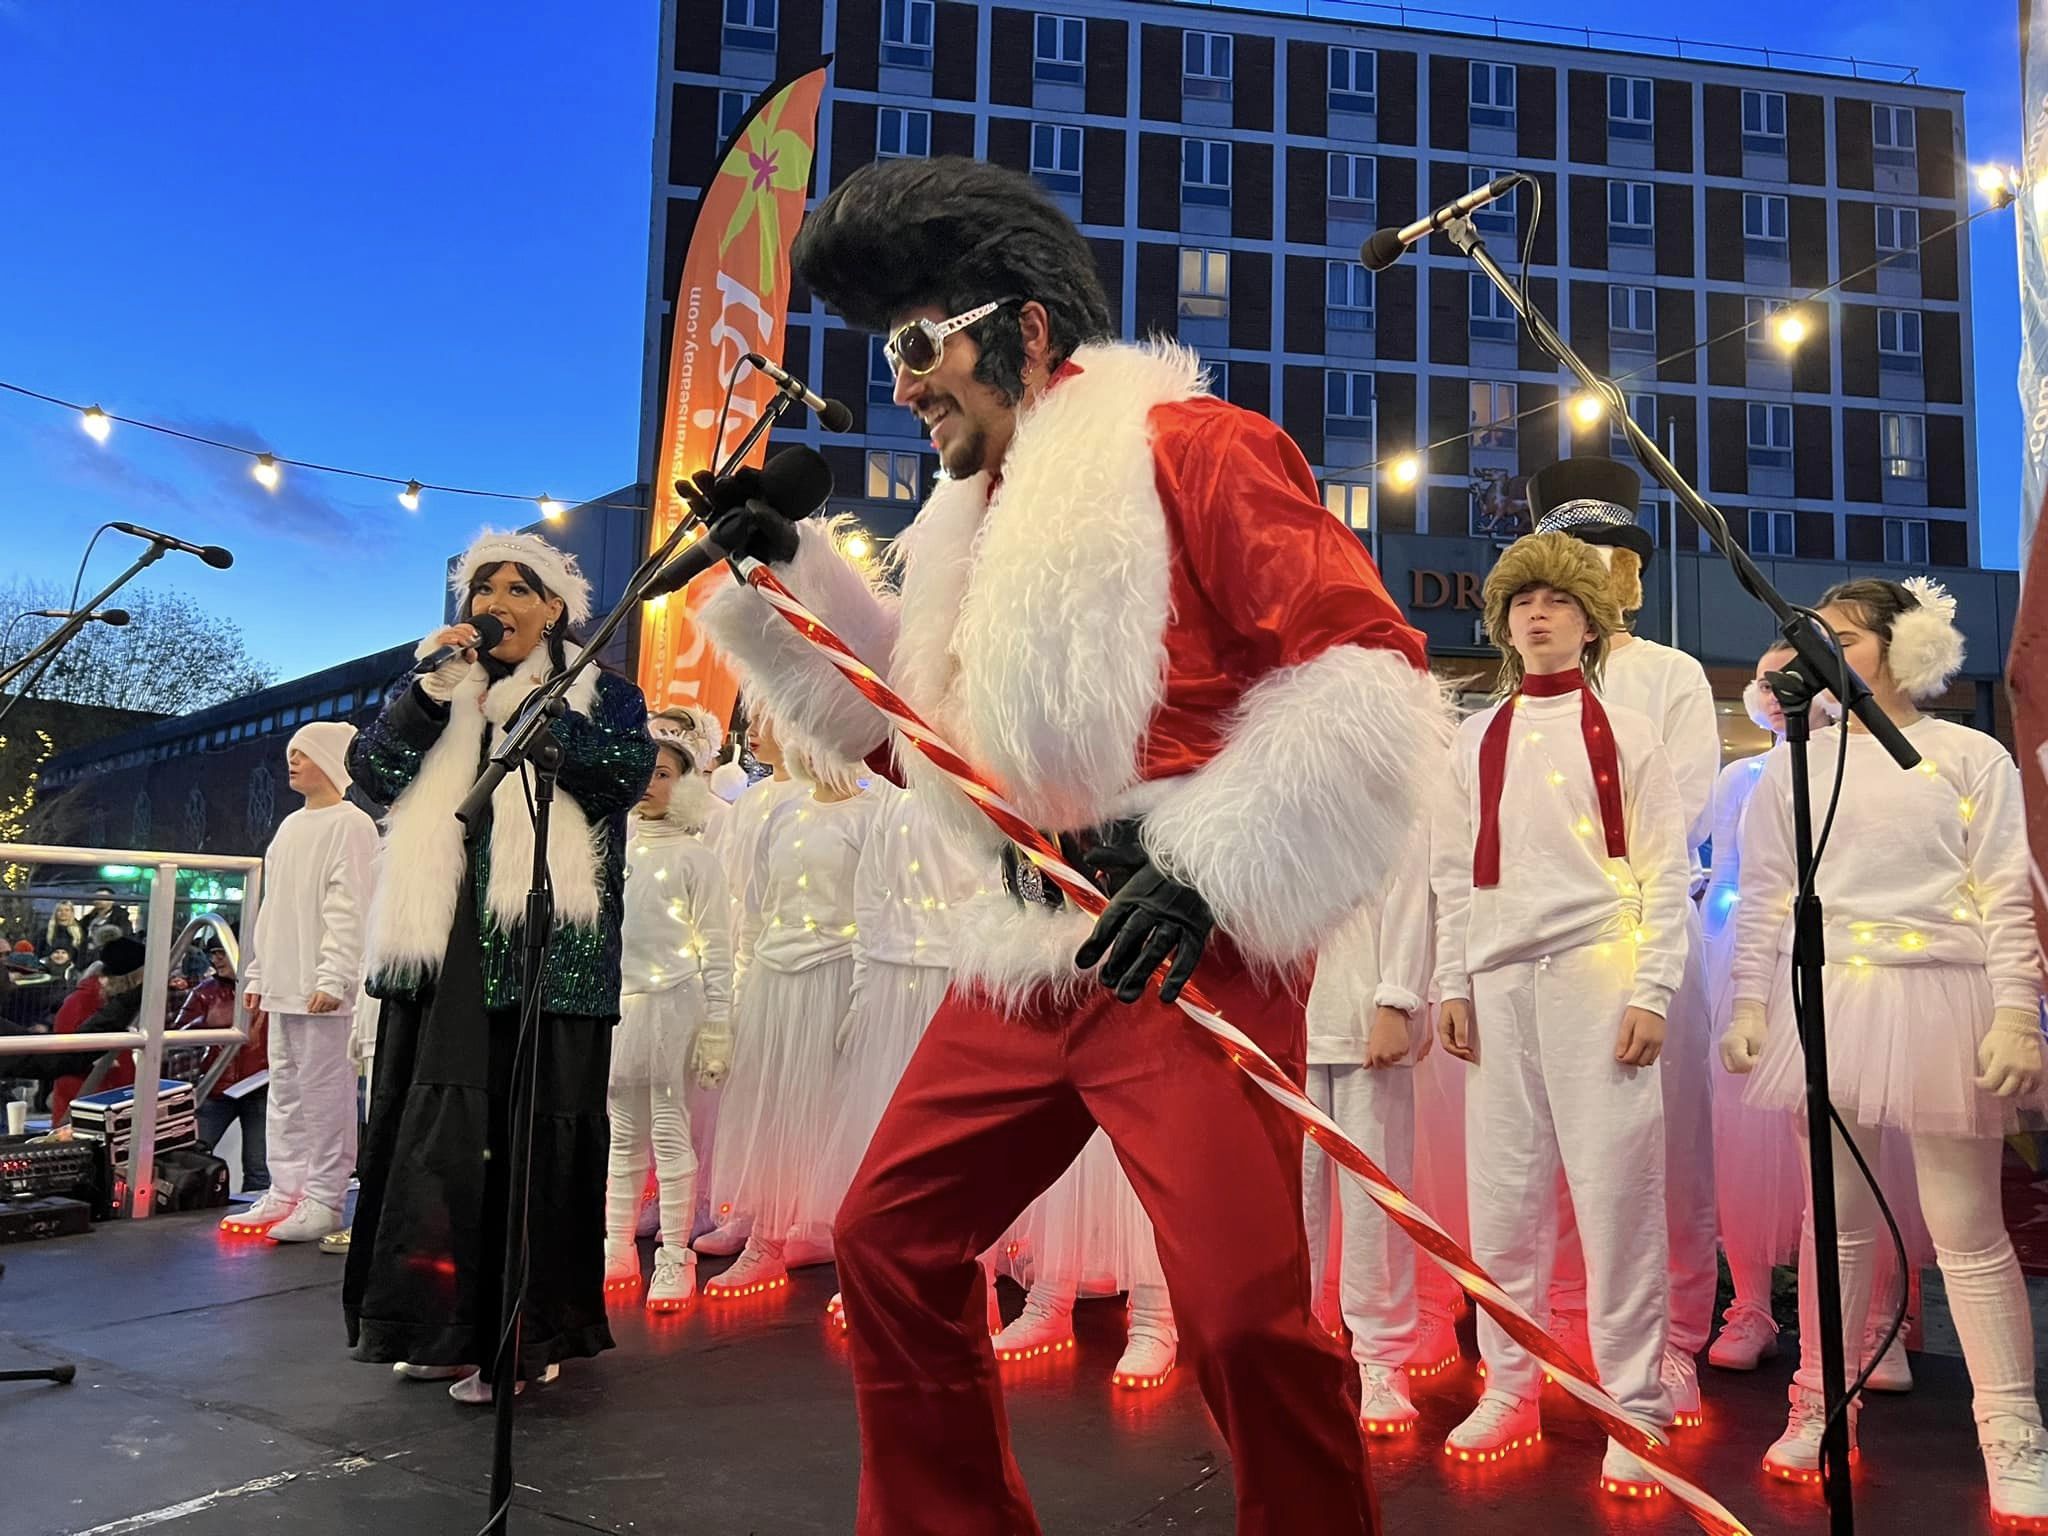 Stefan Pejic performing as 'Quiffmas' at Swansea Christmas Parade 2022